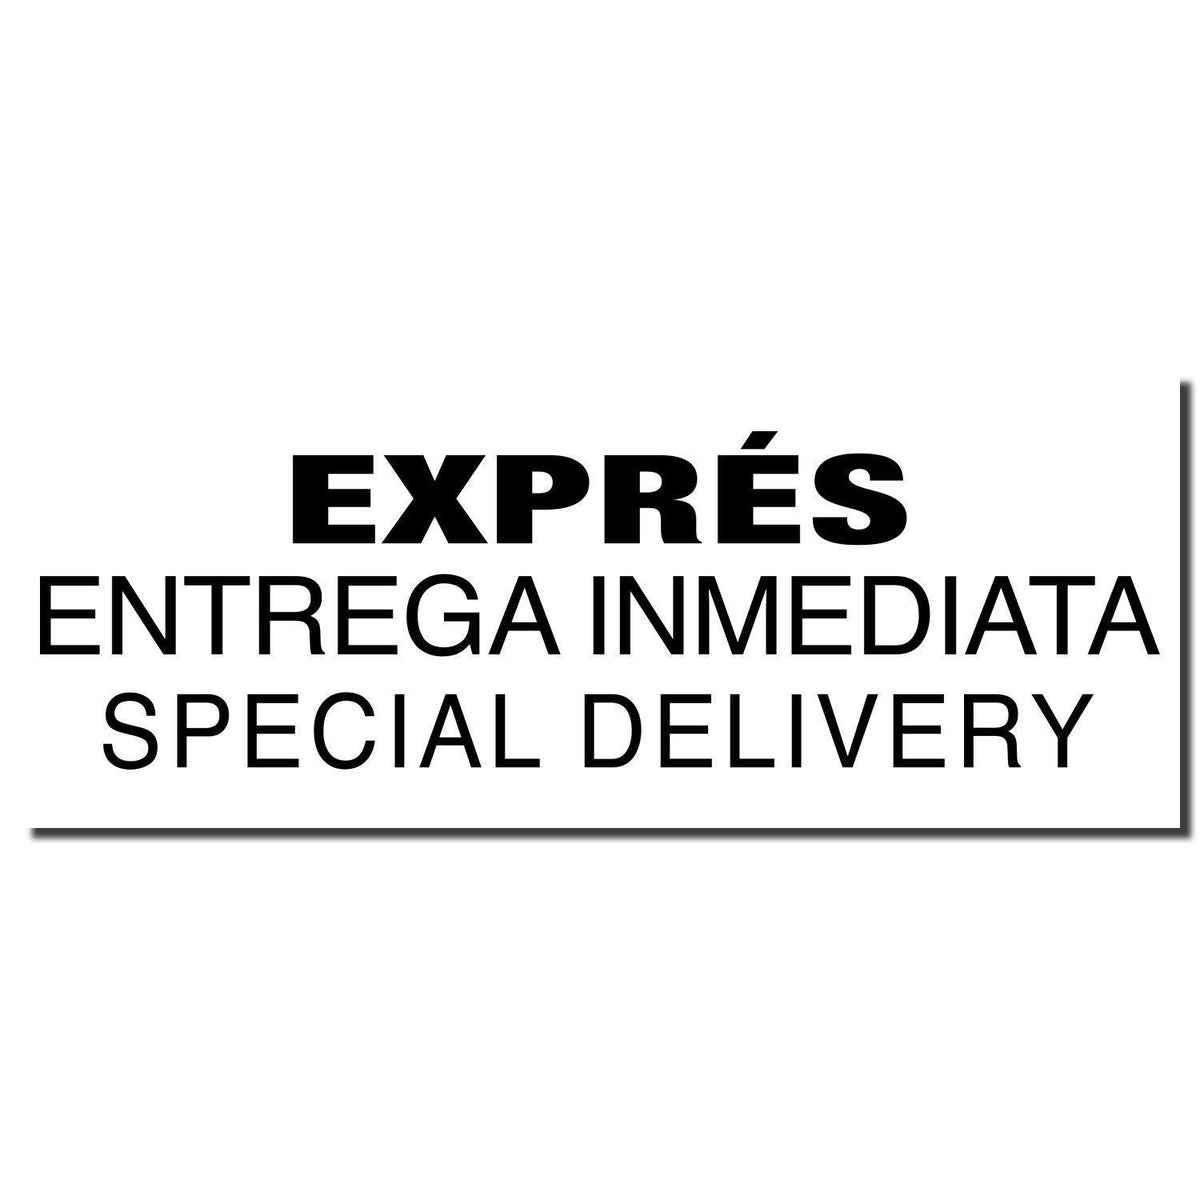 Enlarged Imprint Large Expres Entrega Inmedia Rubber Stamp Sample